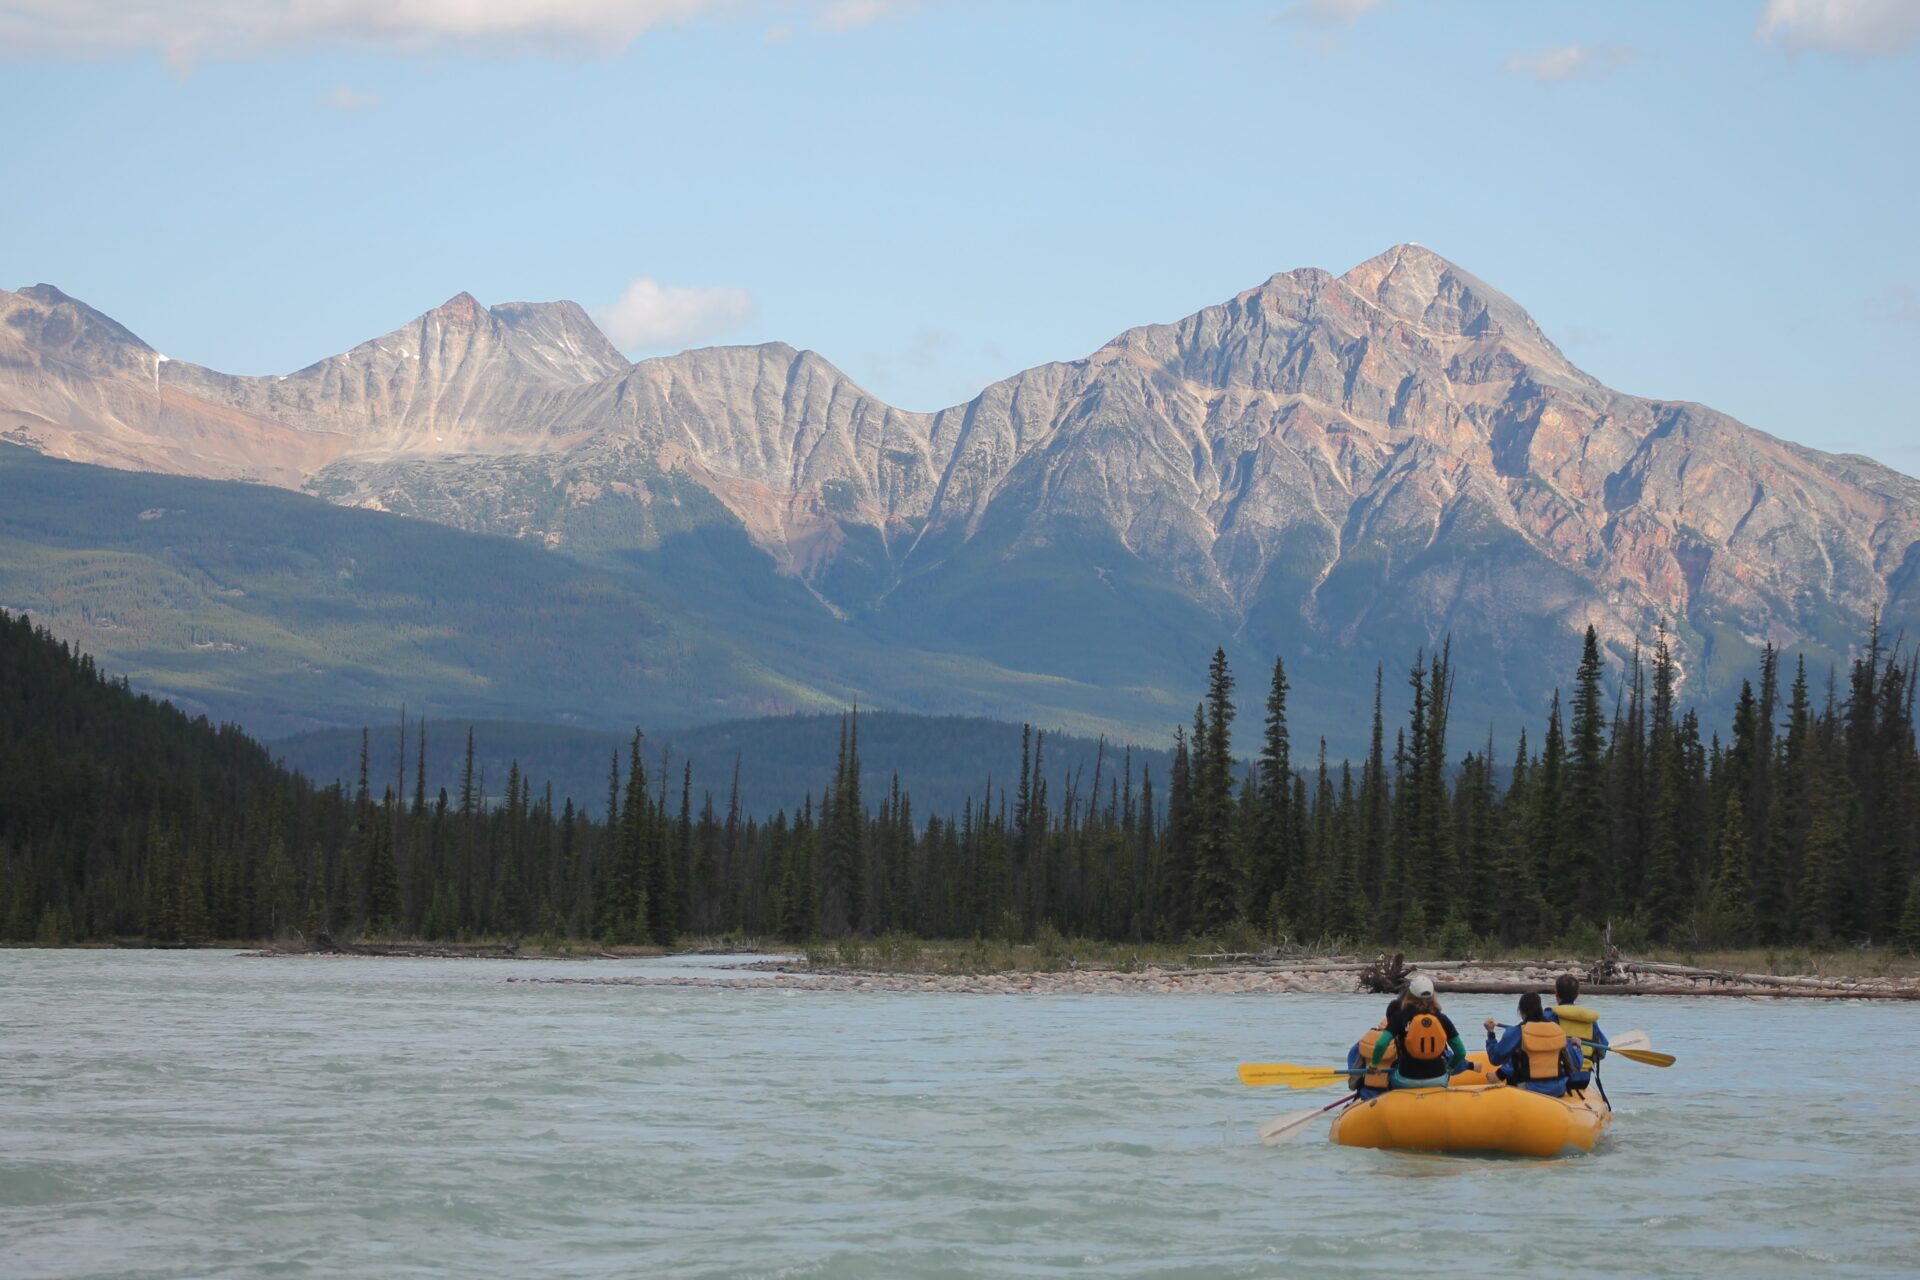 River Rafting with Jasper Rafting in Jasper, Alberta, Canada